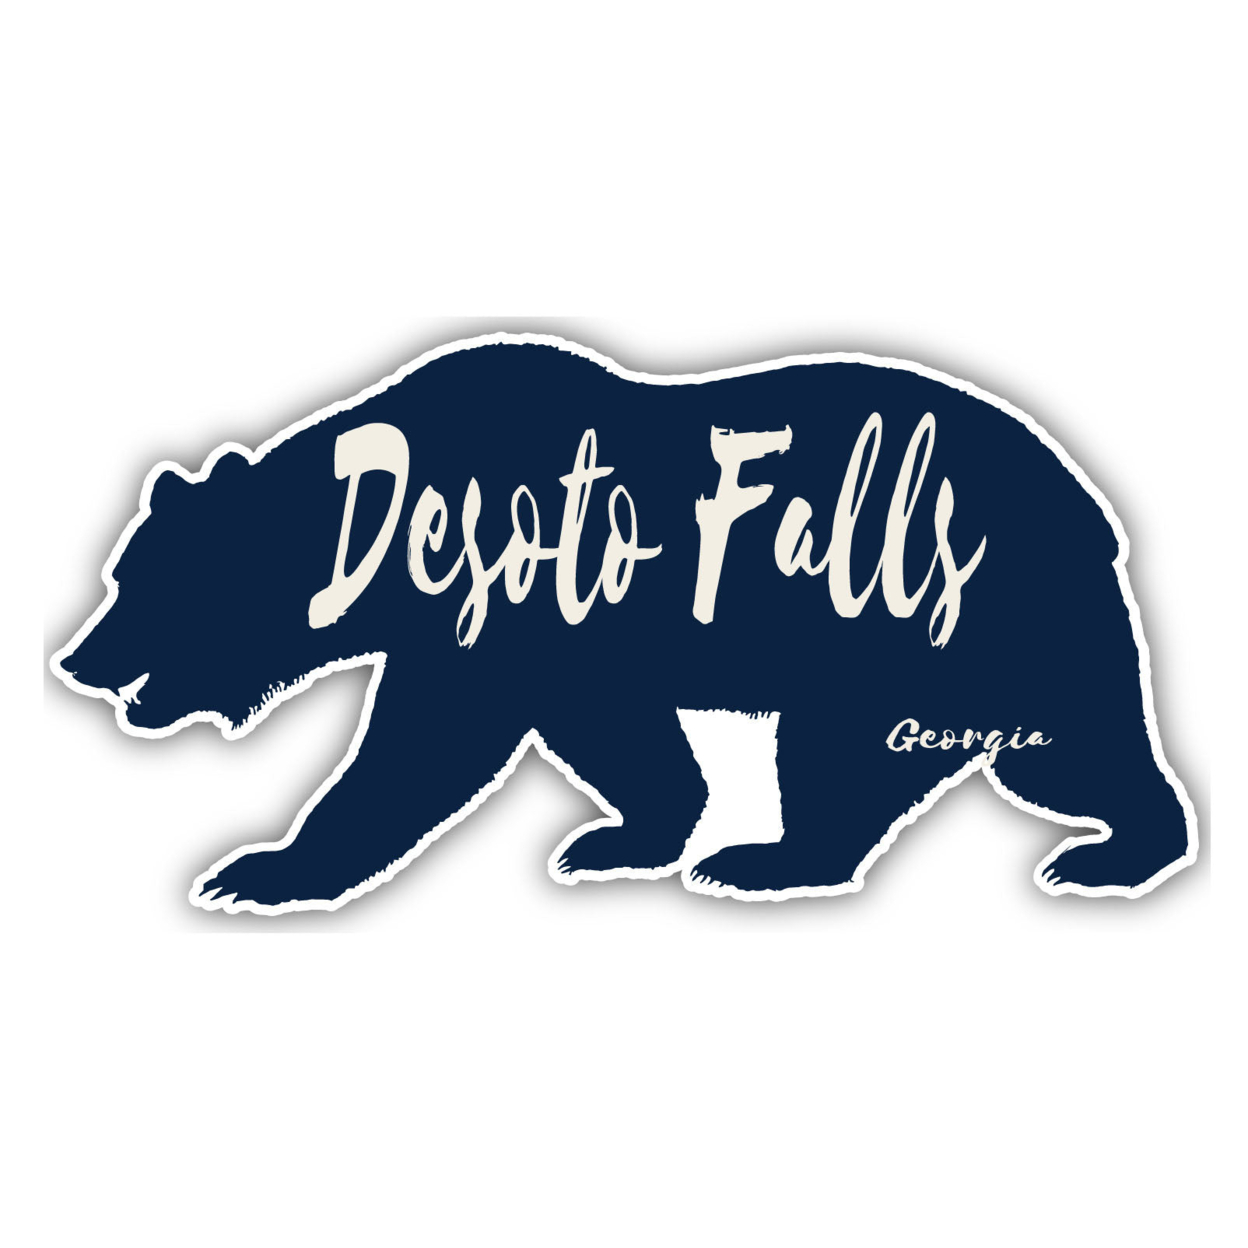 DeSoto Falls Georgia Souvenir Decorative Stickers (Choose Theme And Size) - Single Unit, 10-Inch, Bear